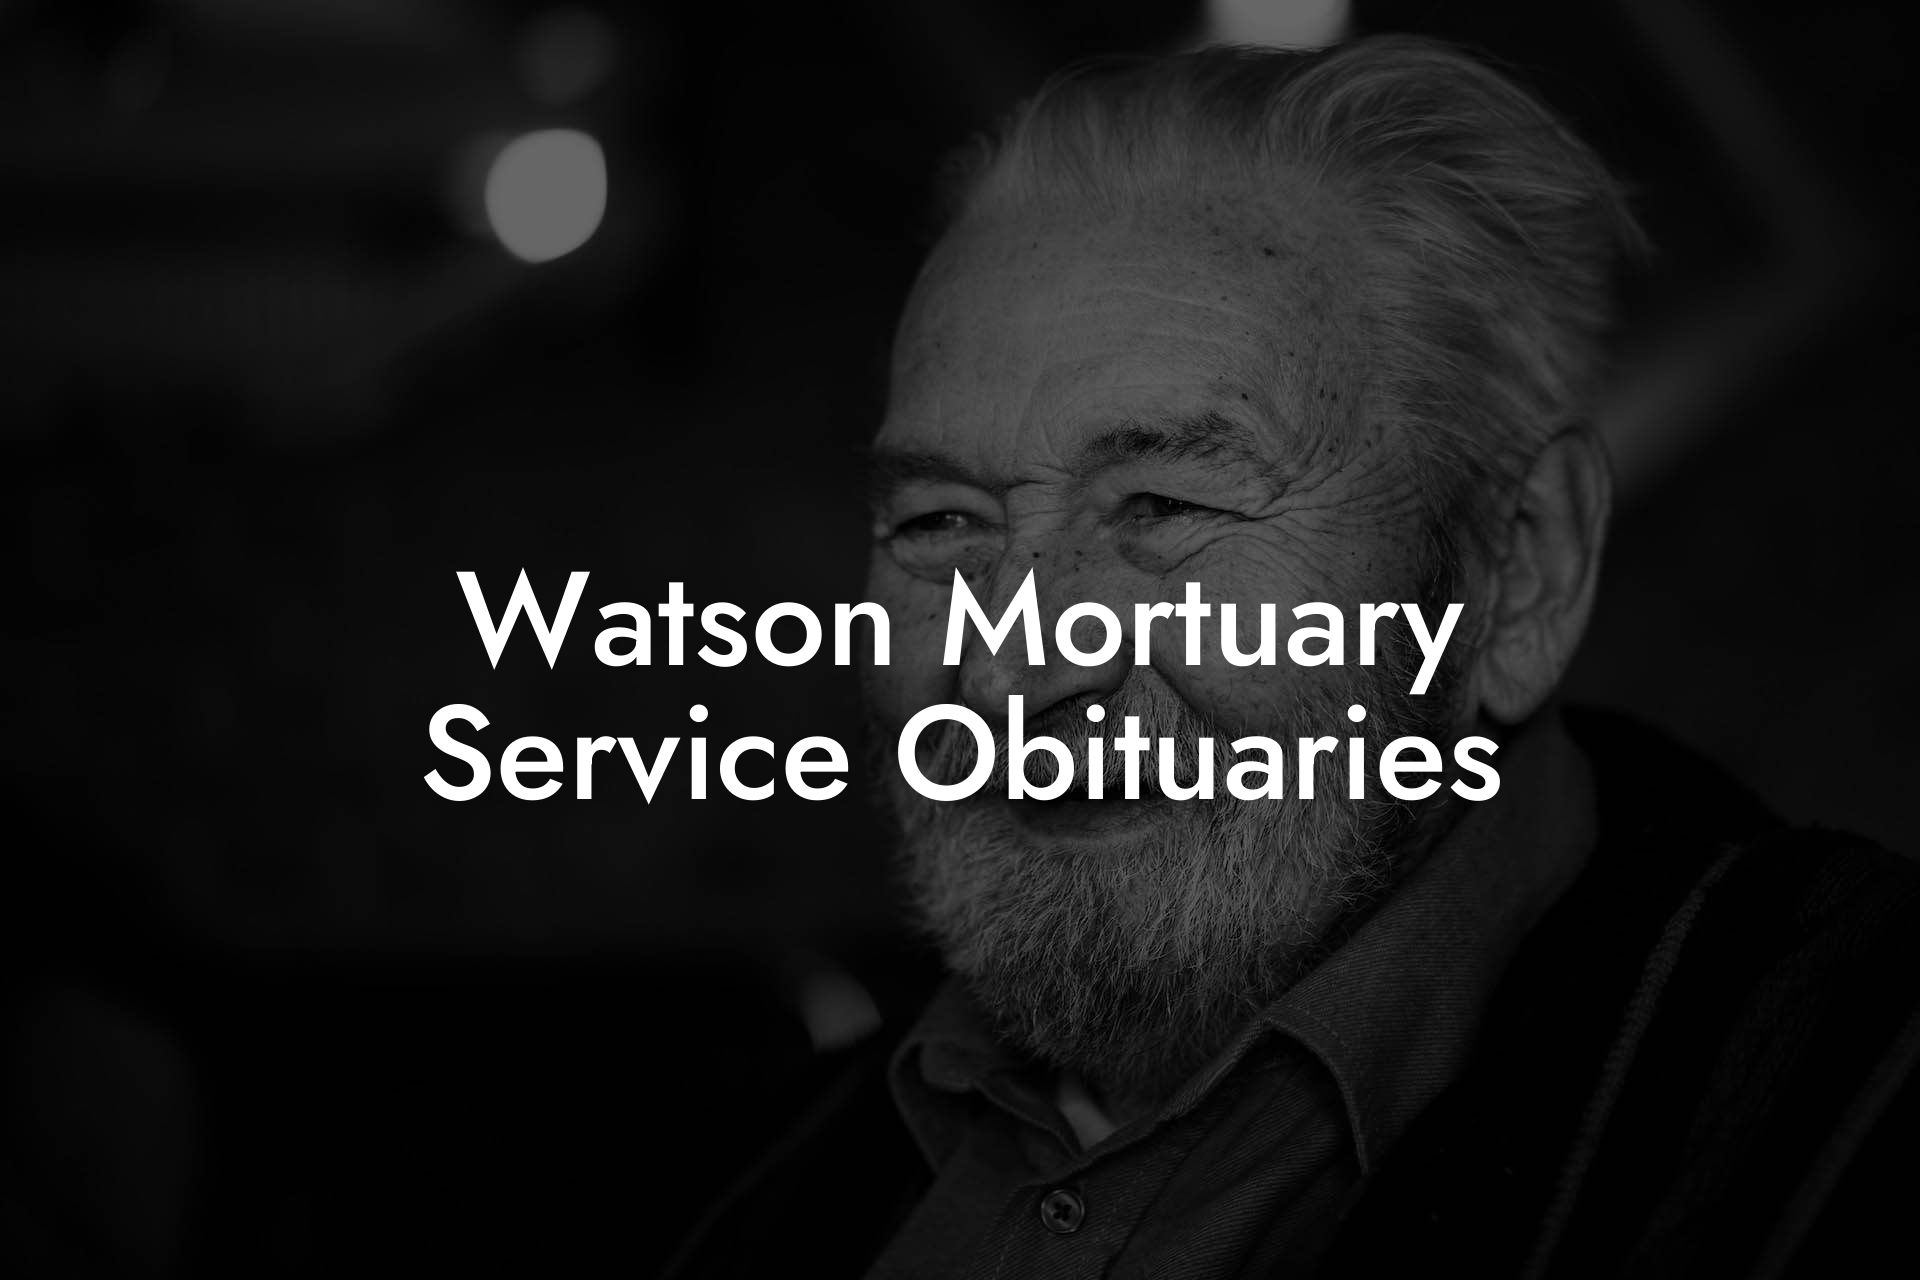 Watson Mortuary Service Obituaries